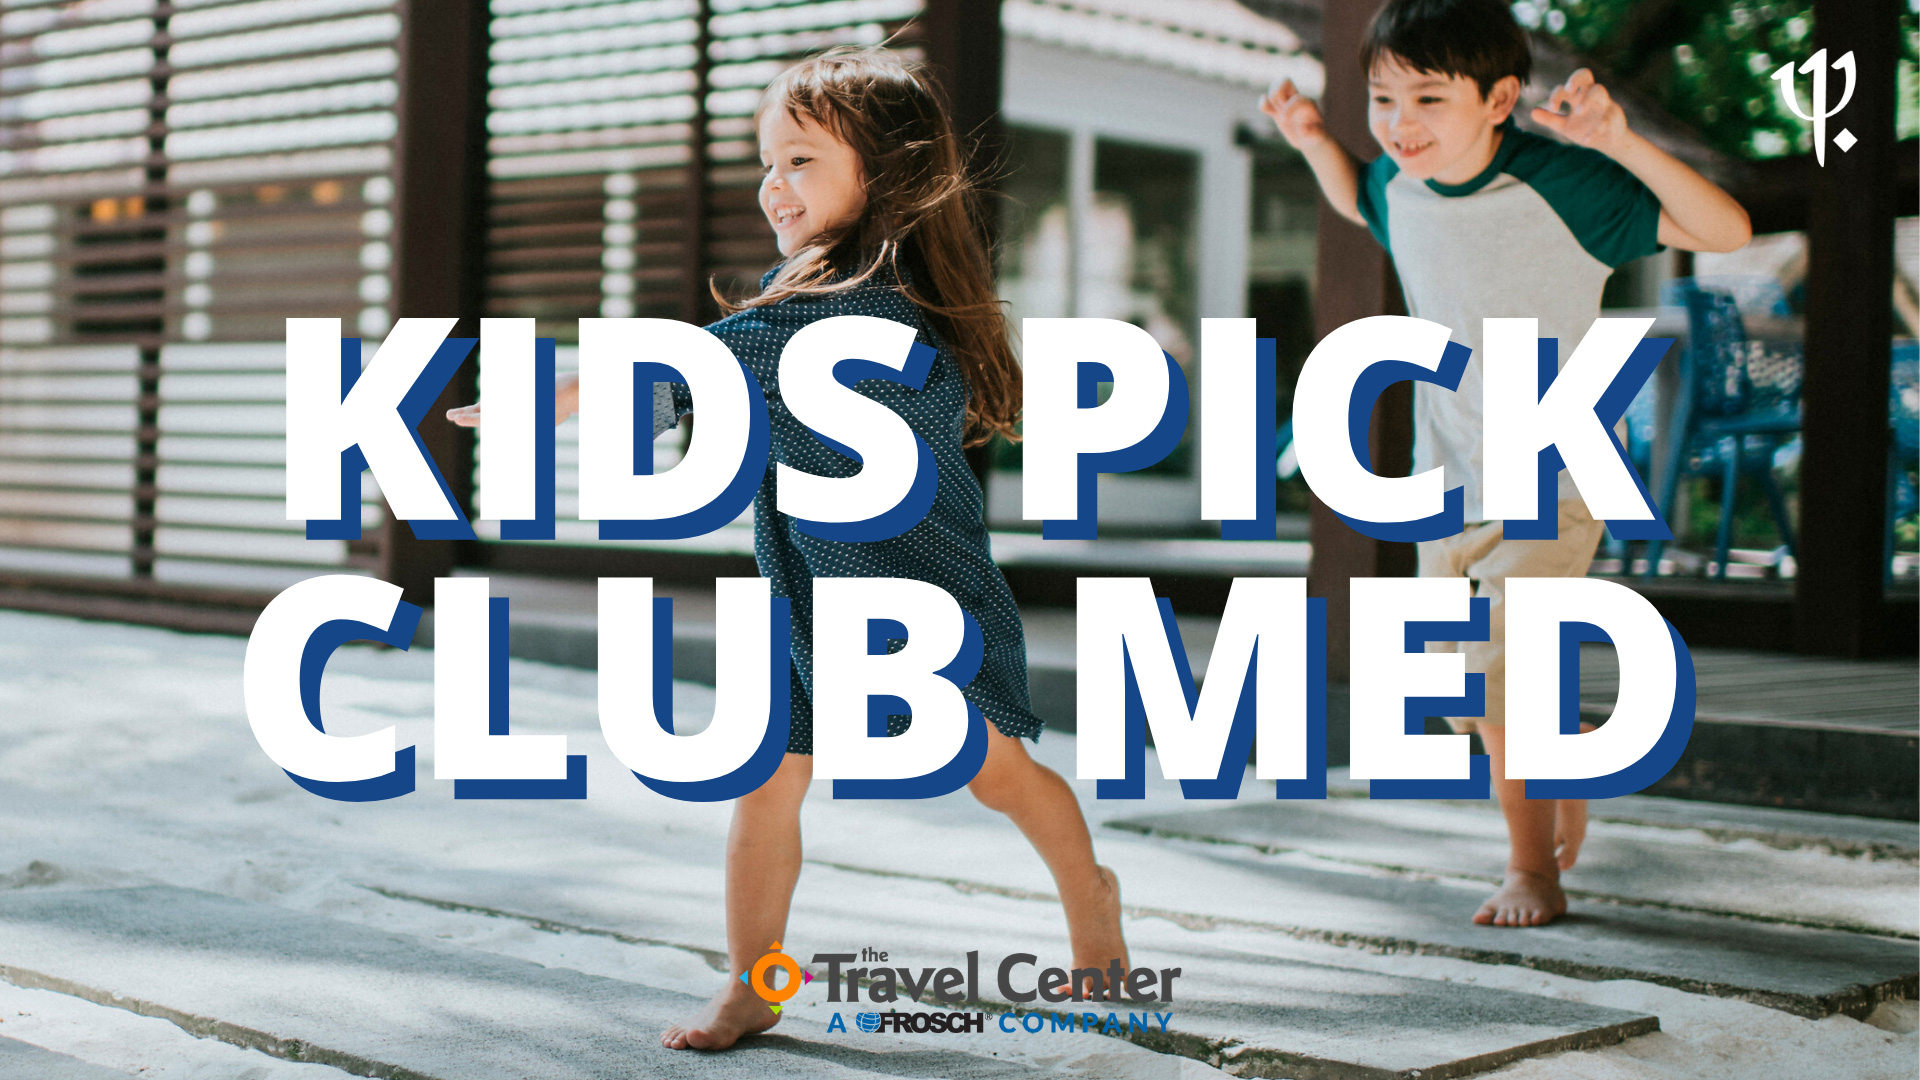 Kids Pick Club Med